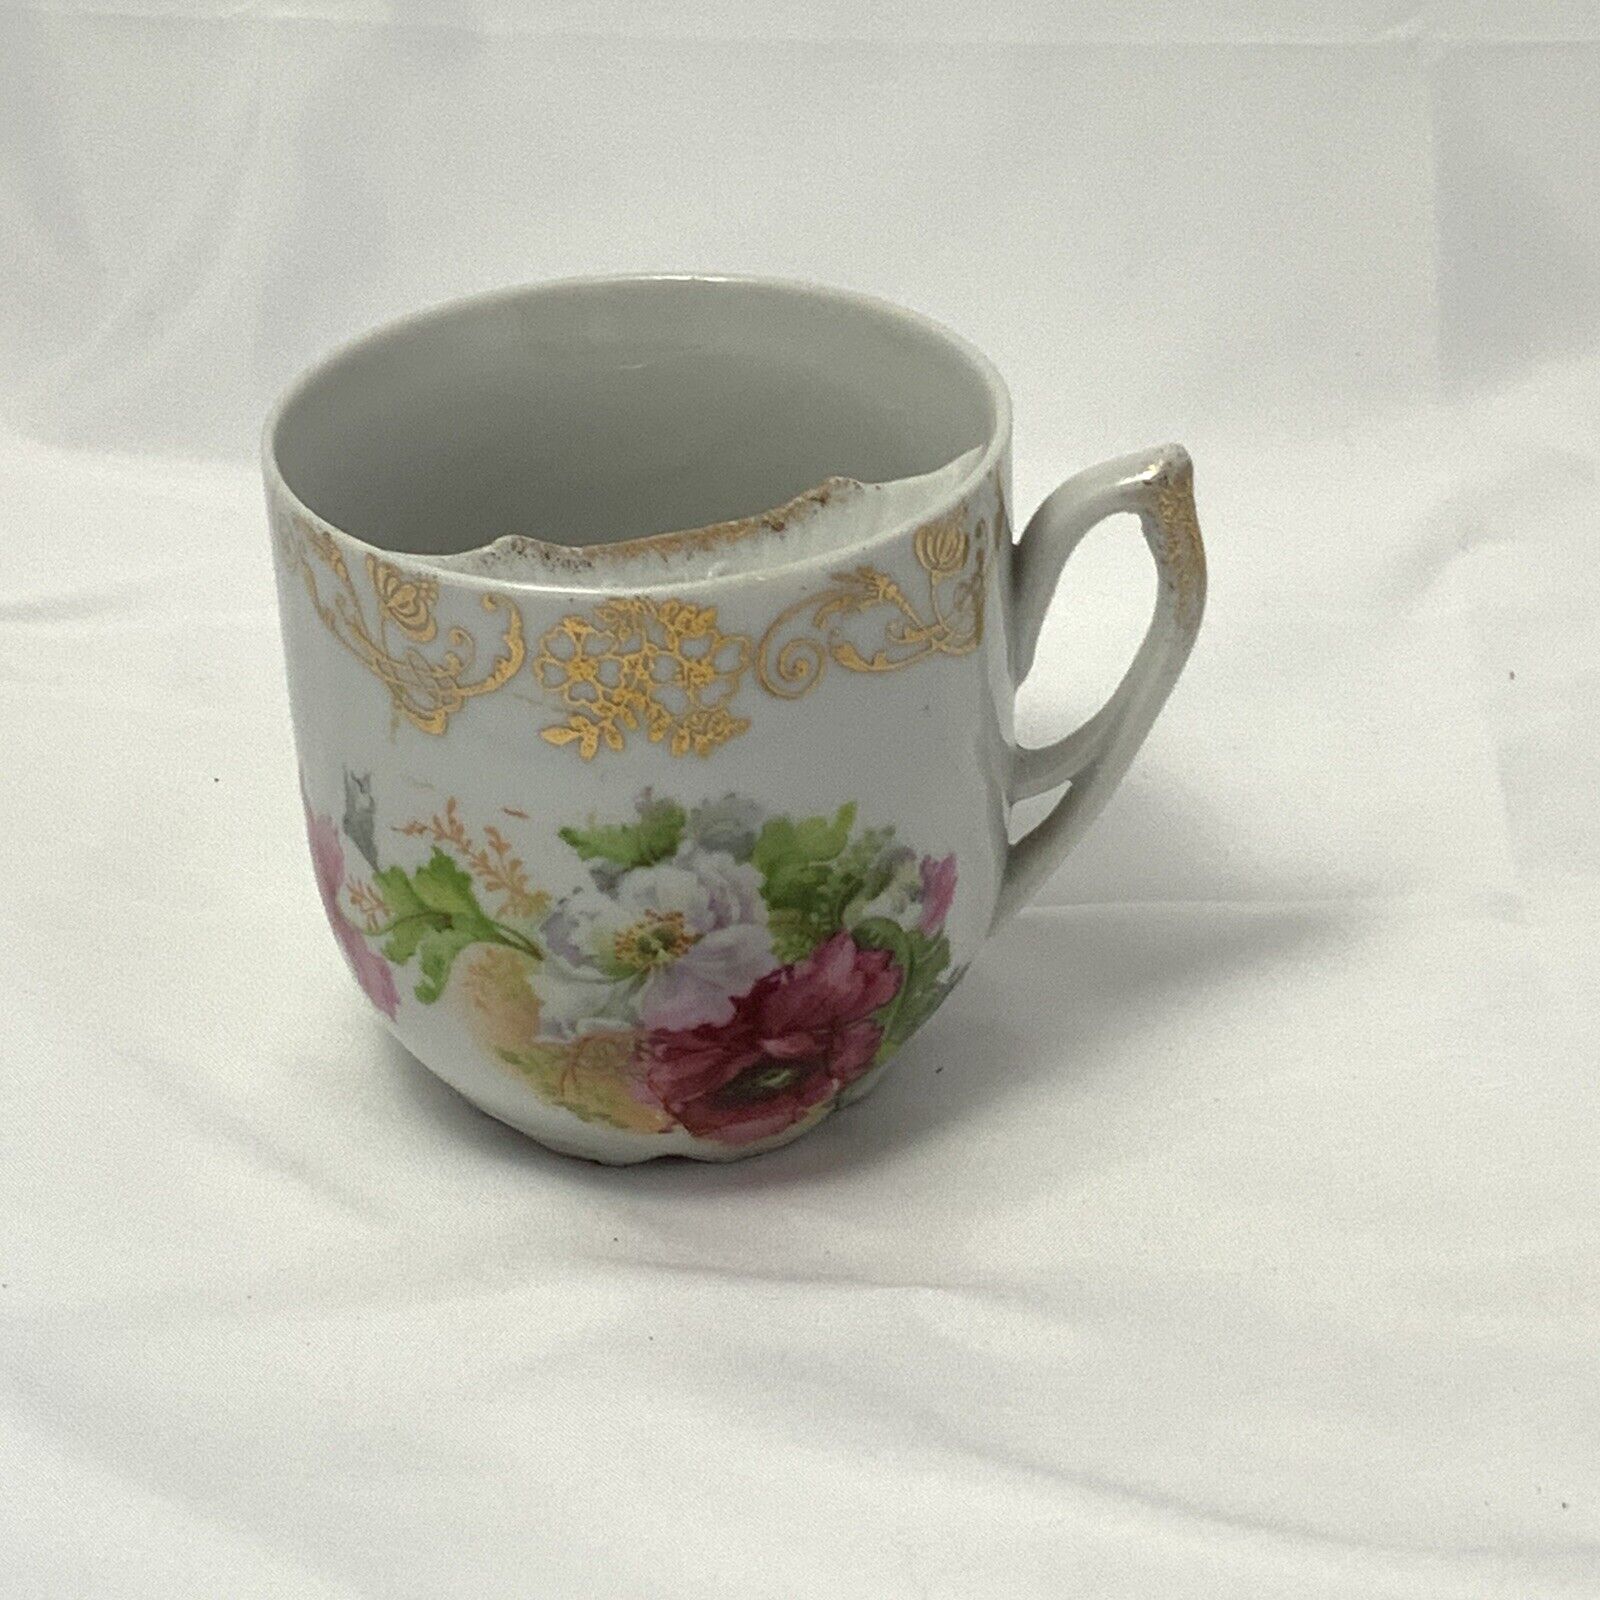 Vintage Porcelain Mustache Cup mug Roses pink white flowers gold rim scroll  